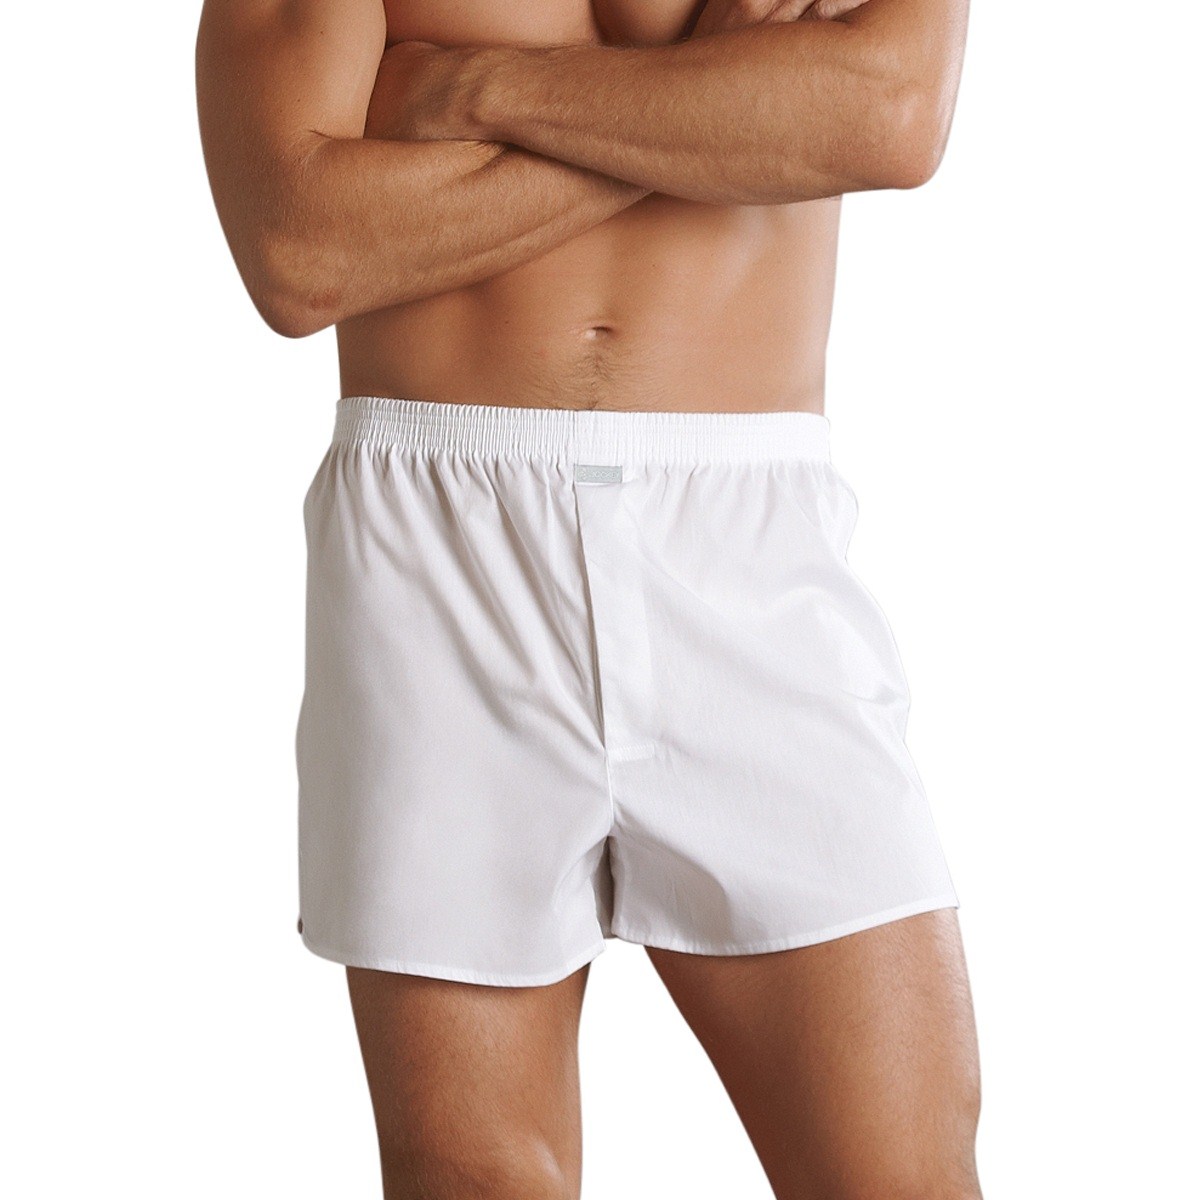 Jockey Woven Boxer White 314000 - Boxer shorts - Trunks - Underwear ...